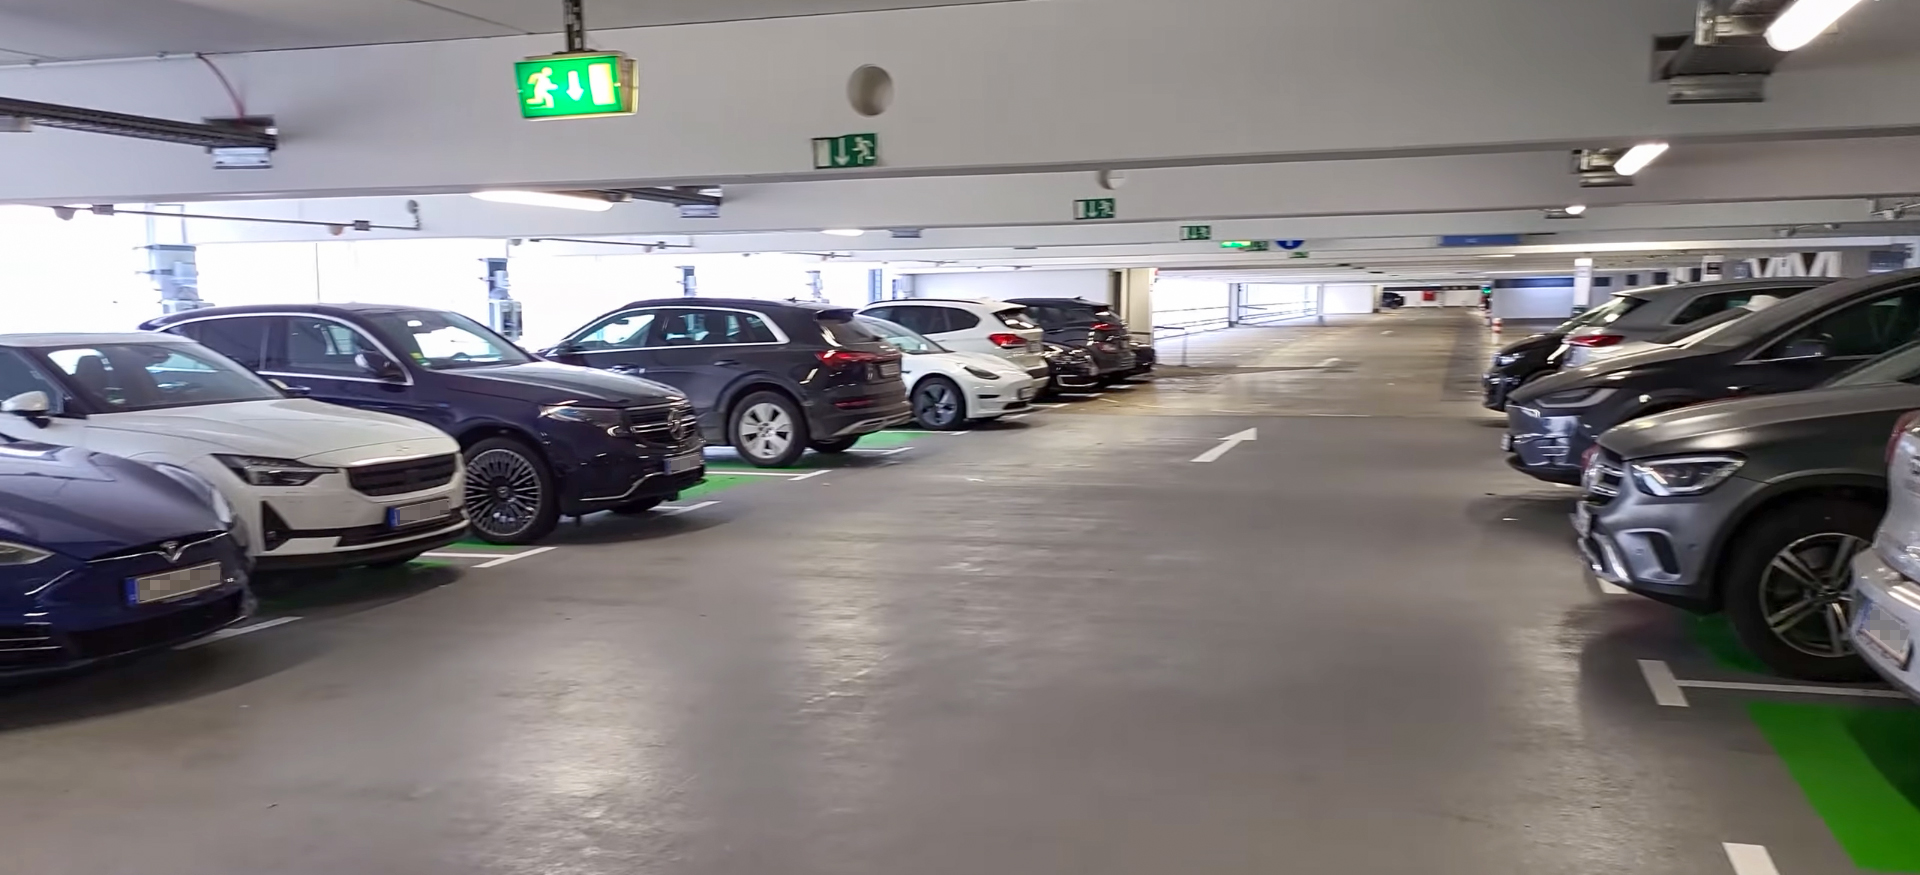 Flughafen München Parkplätze E-Autos